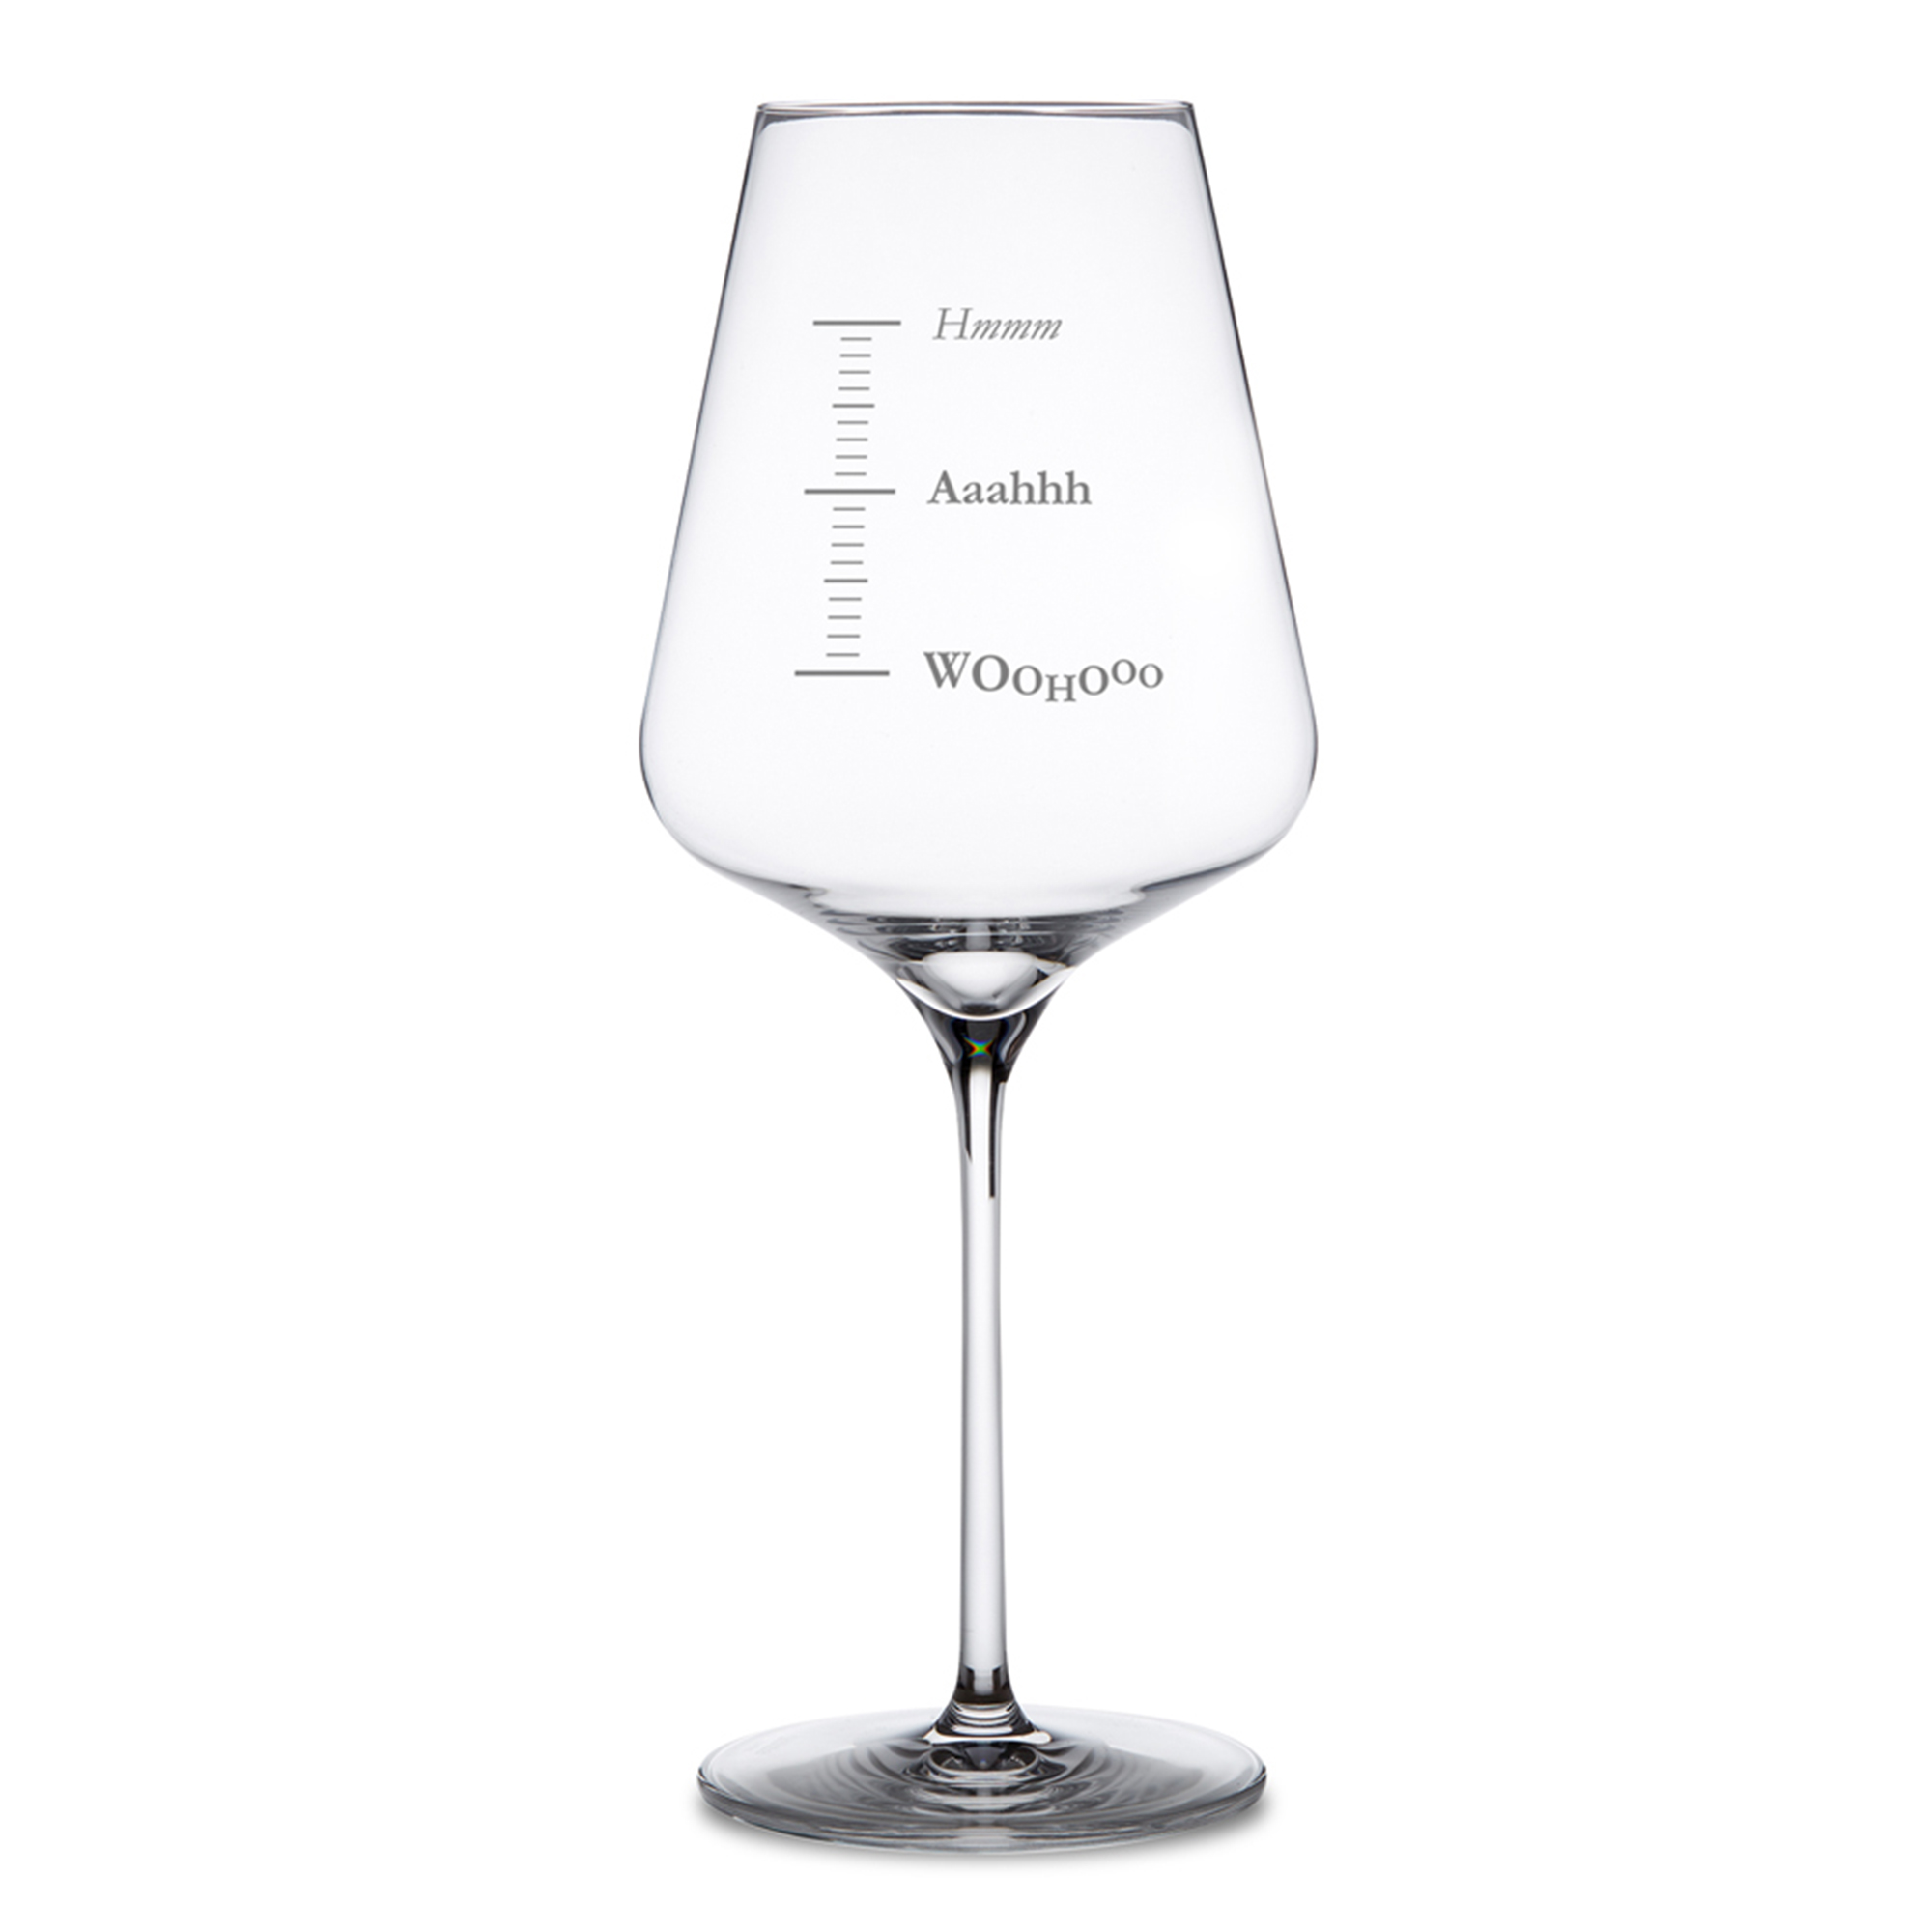 Weinglas mit Gravur - Woohooo 3283 - 1